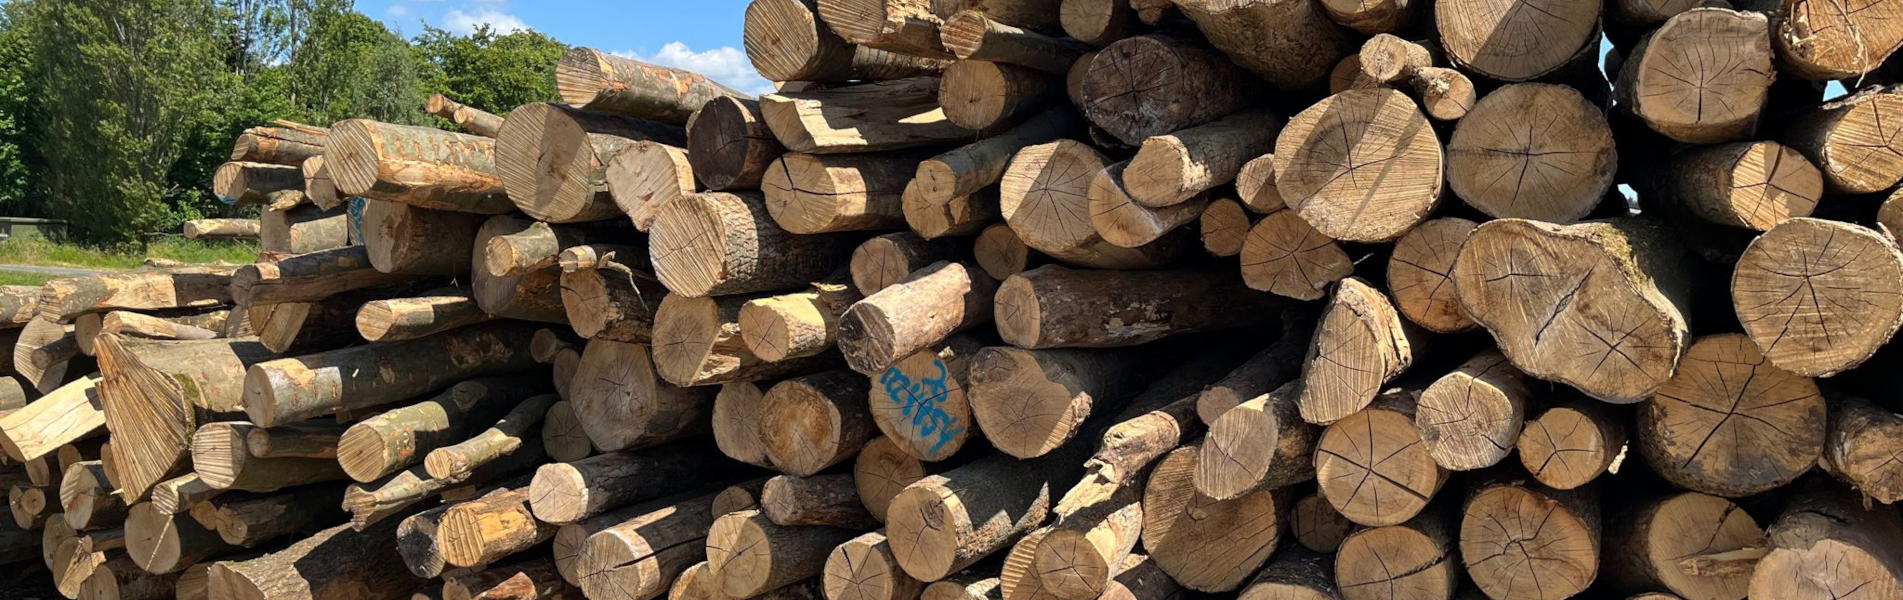 Brennholz aus eigener Produktion